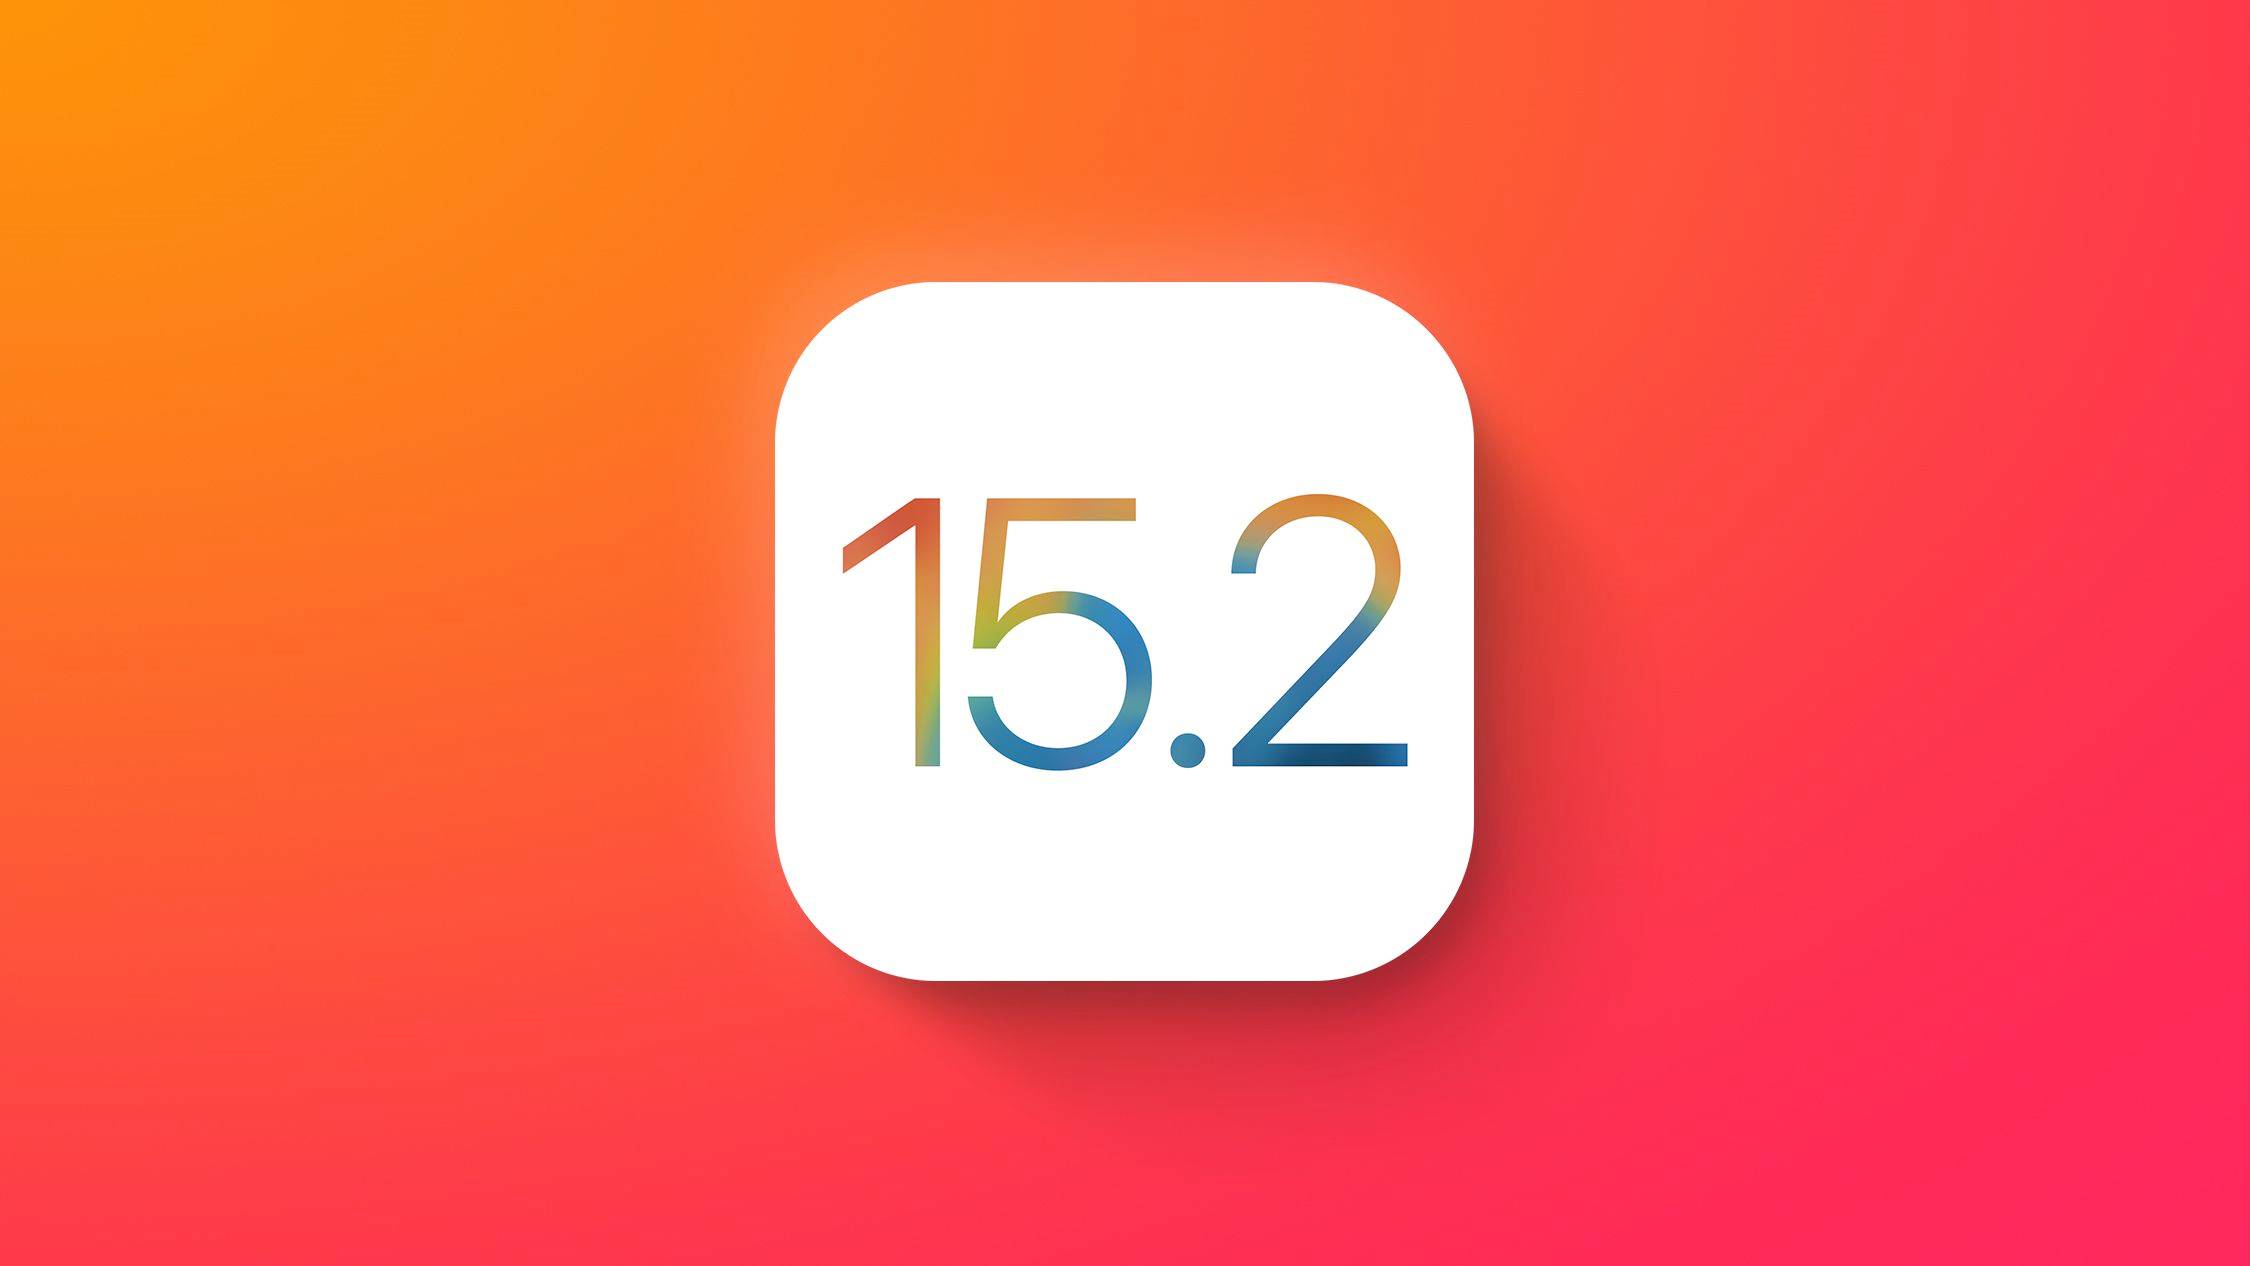 Rilascio iOS 15.2 Novità iPhone iPad iPod Touch